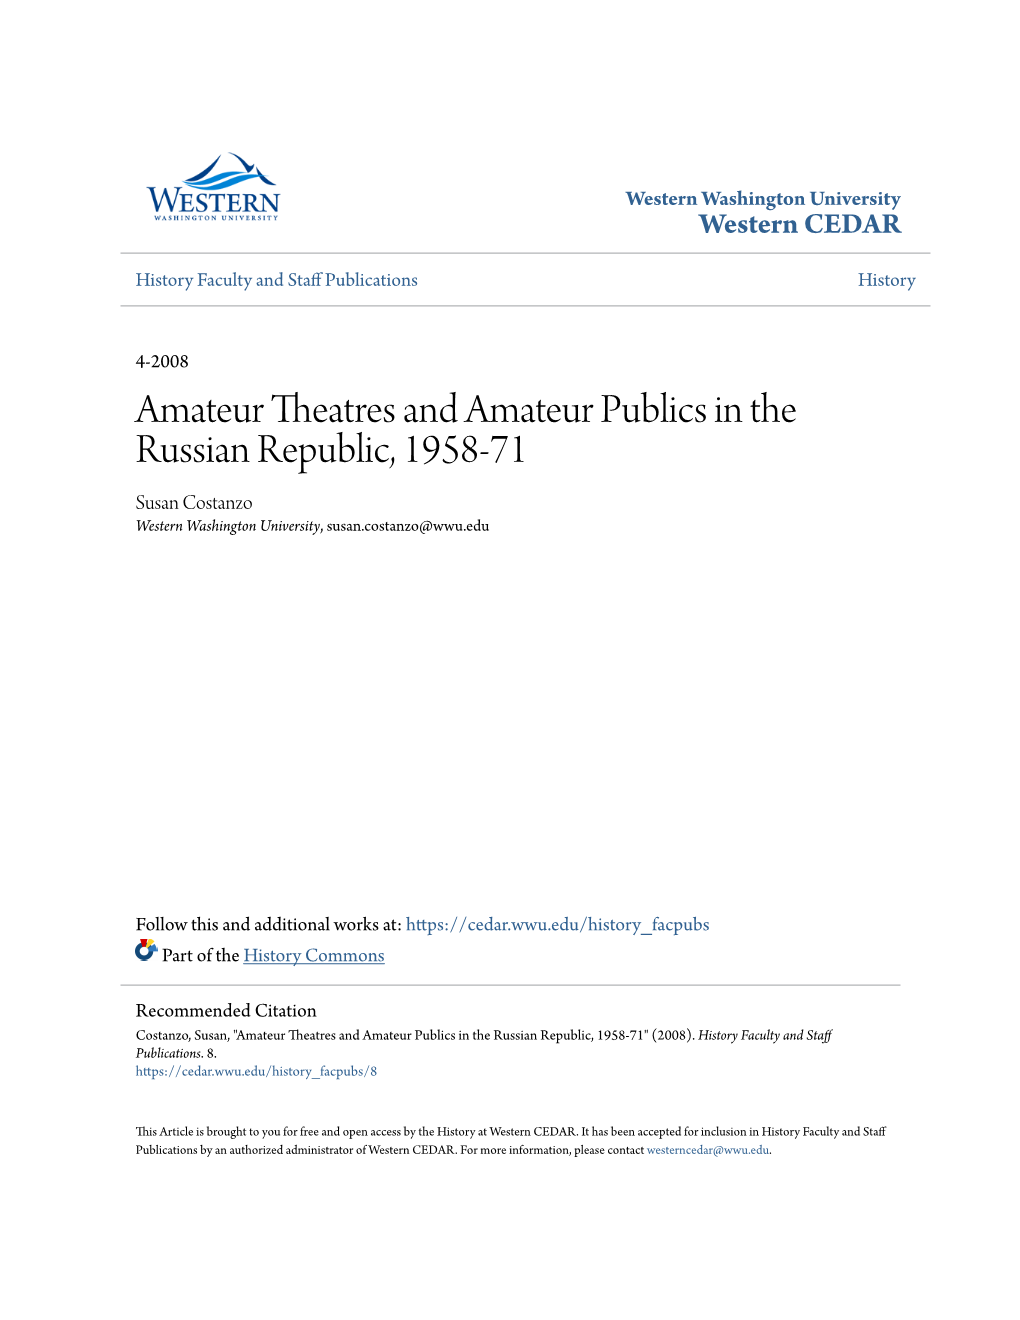 Amateur Theatres and Amateur Publics in the Russian Republic, 1958-71 Susan Costanzo Western Washington University, Susan.Costanzo@Wwu.Edu